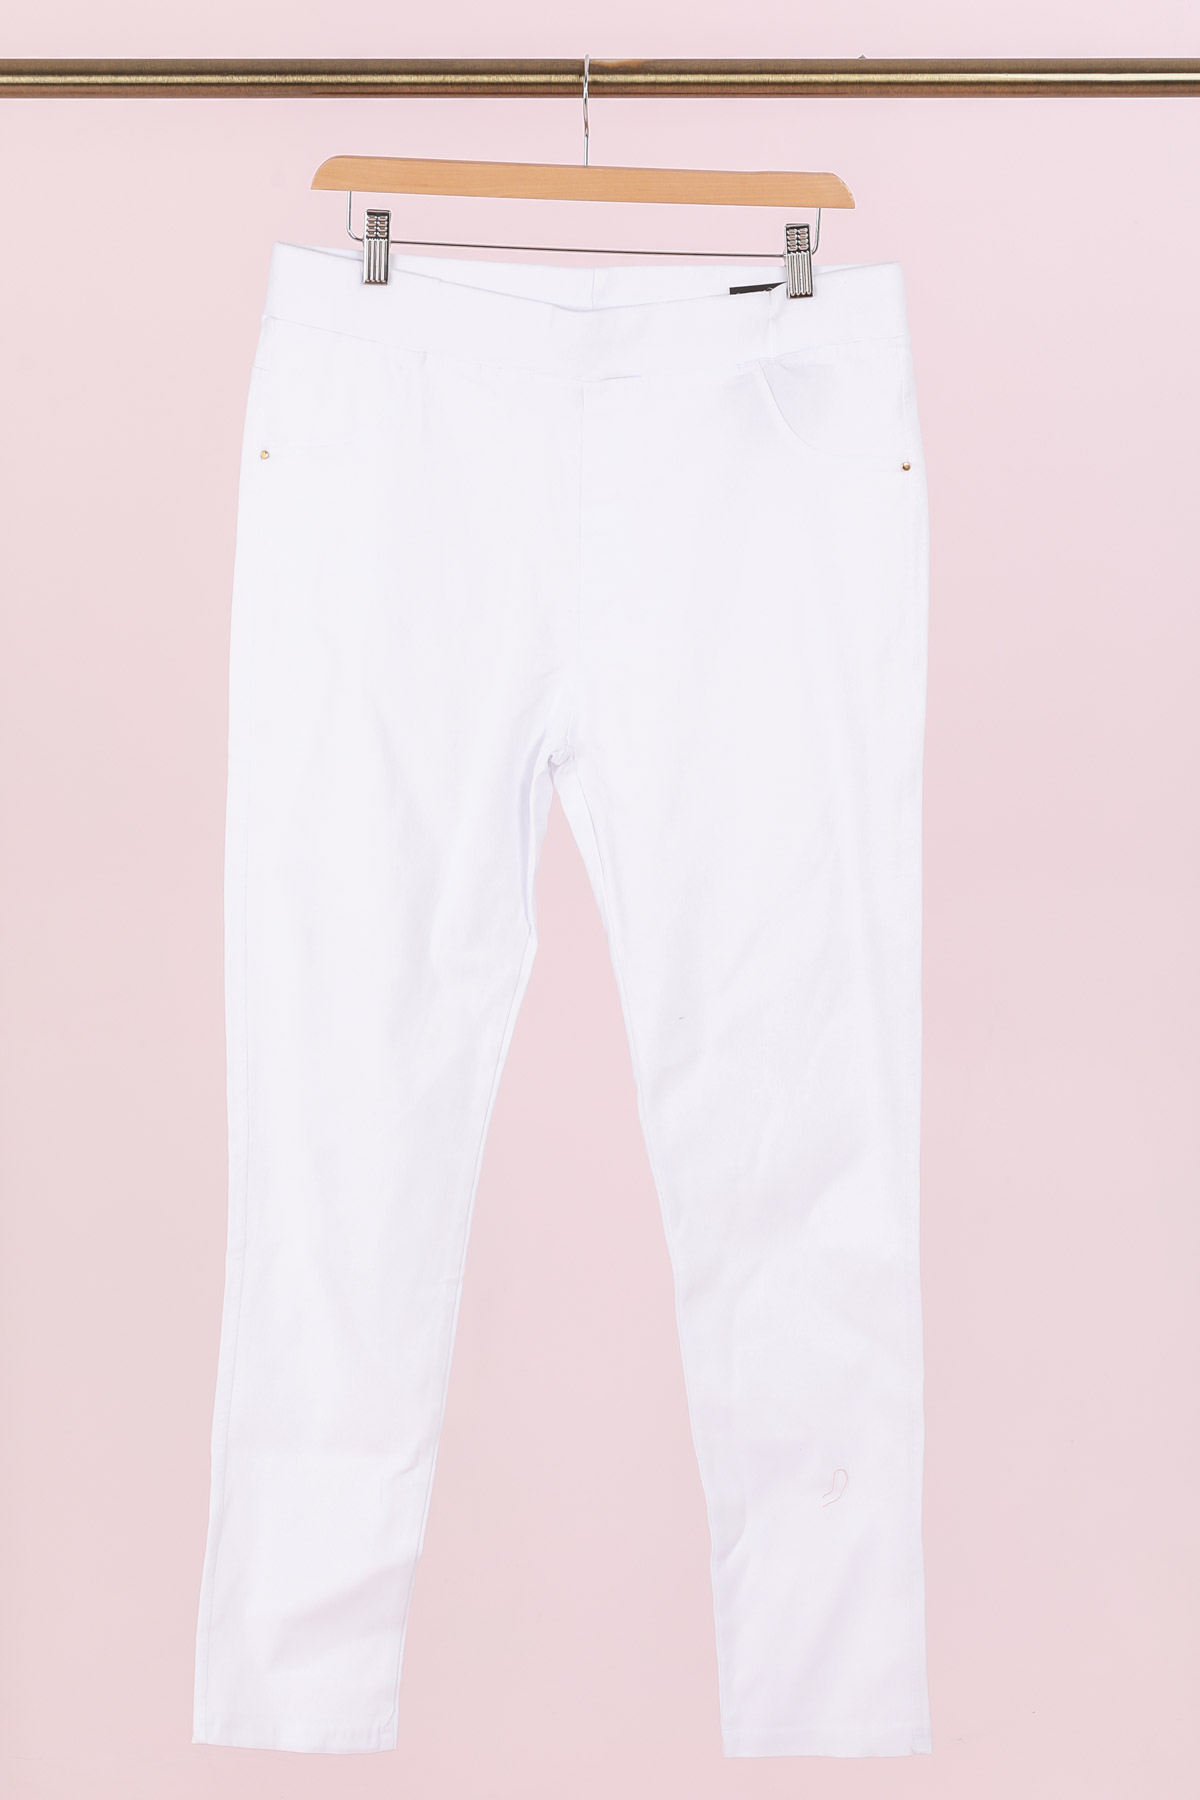 Pantalones Mujer White Christy 6502 #c Efashion Paris